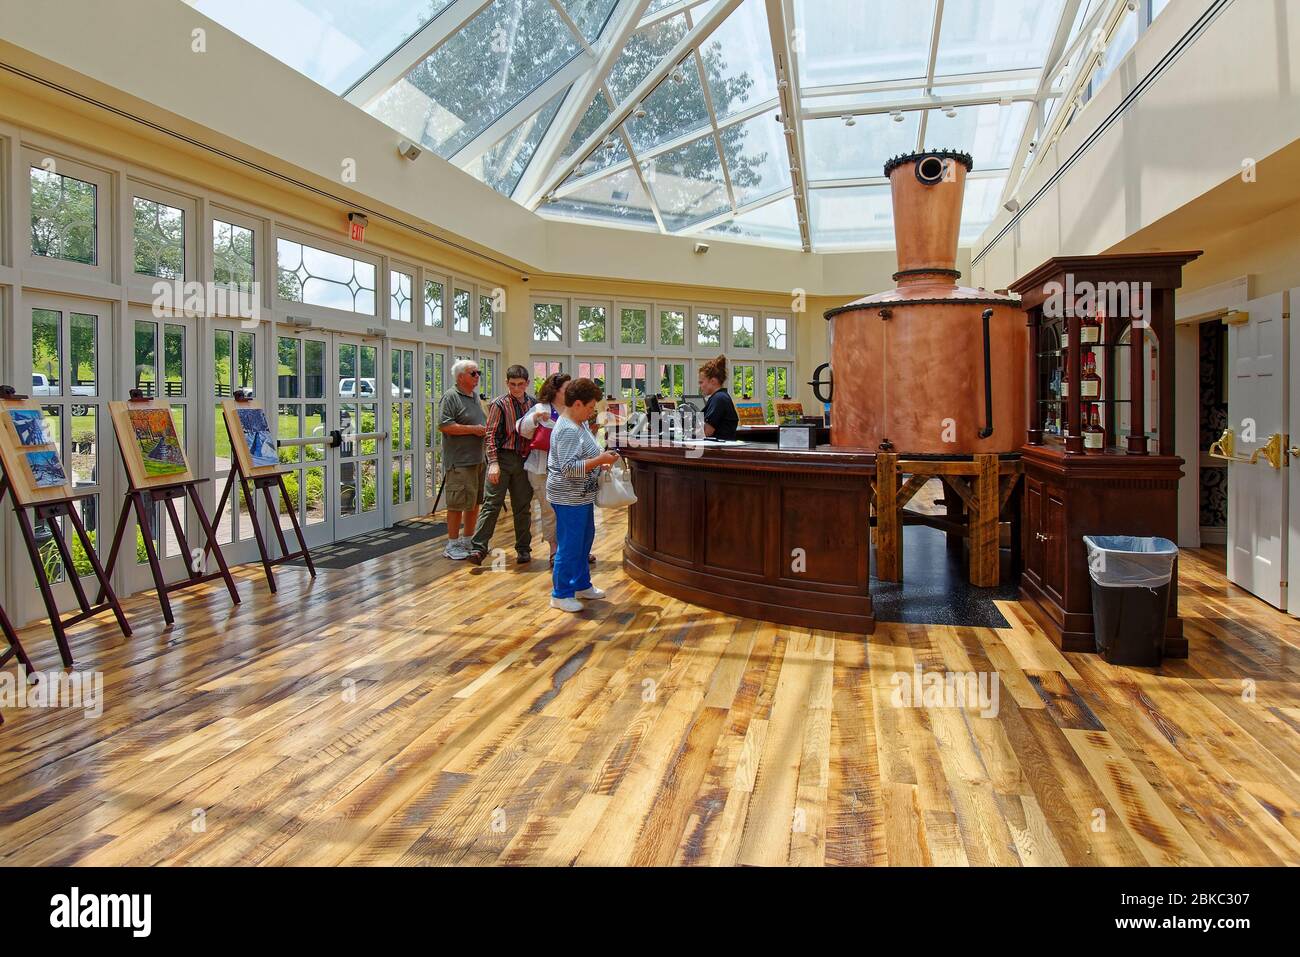 Maker's Mark Bourbon Distillery; Visitor Center, glass roof, copper tank decoration, wood floor, paintings on easels, National Historic Landmark, peop Stock Photo